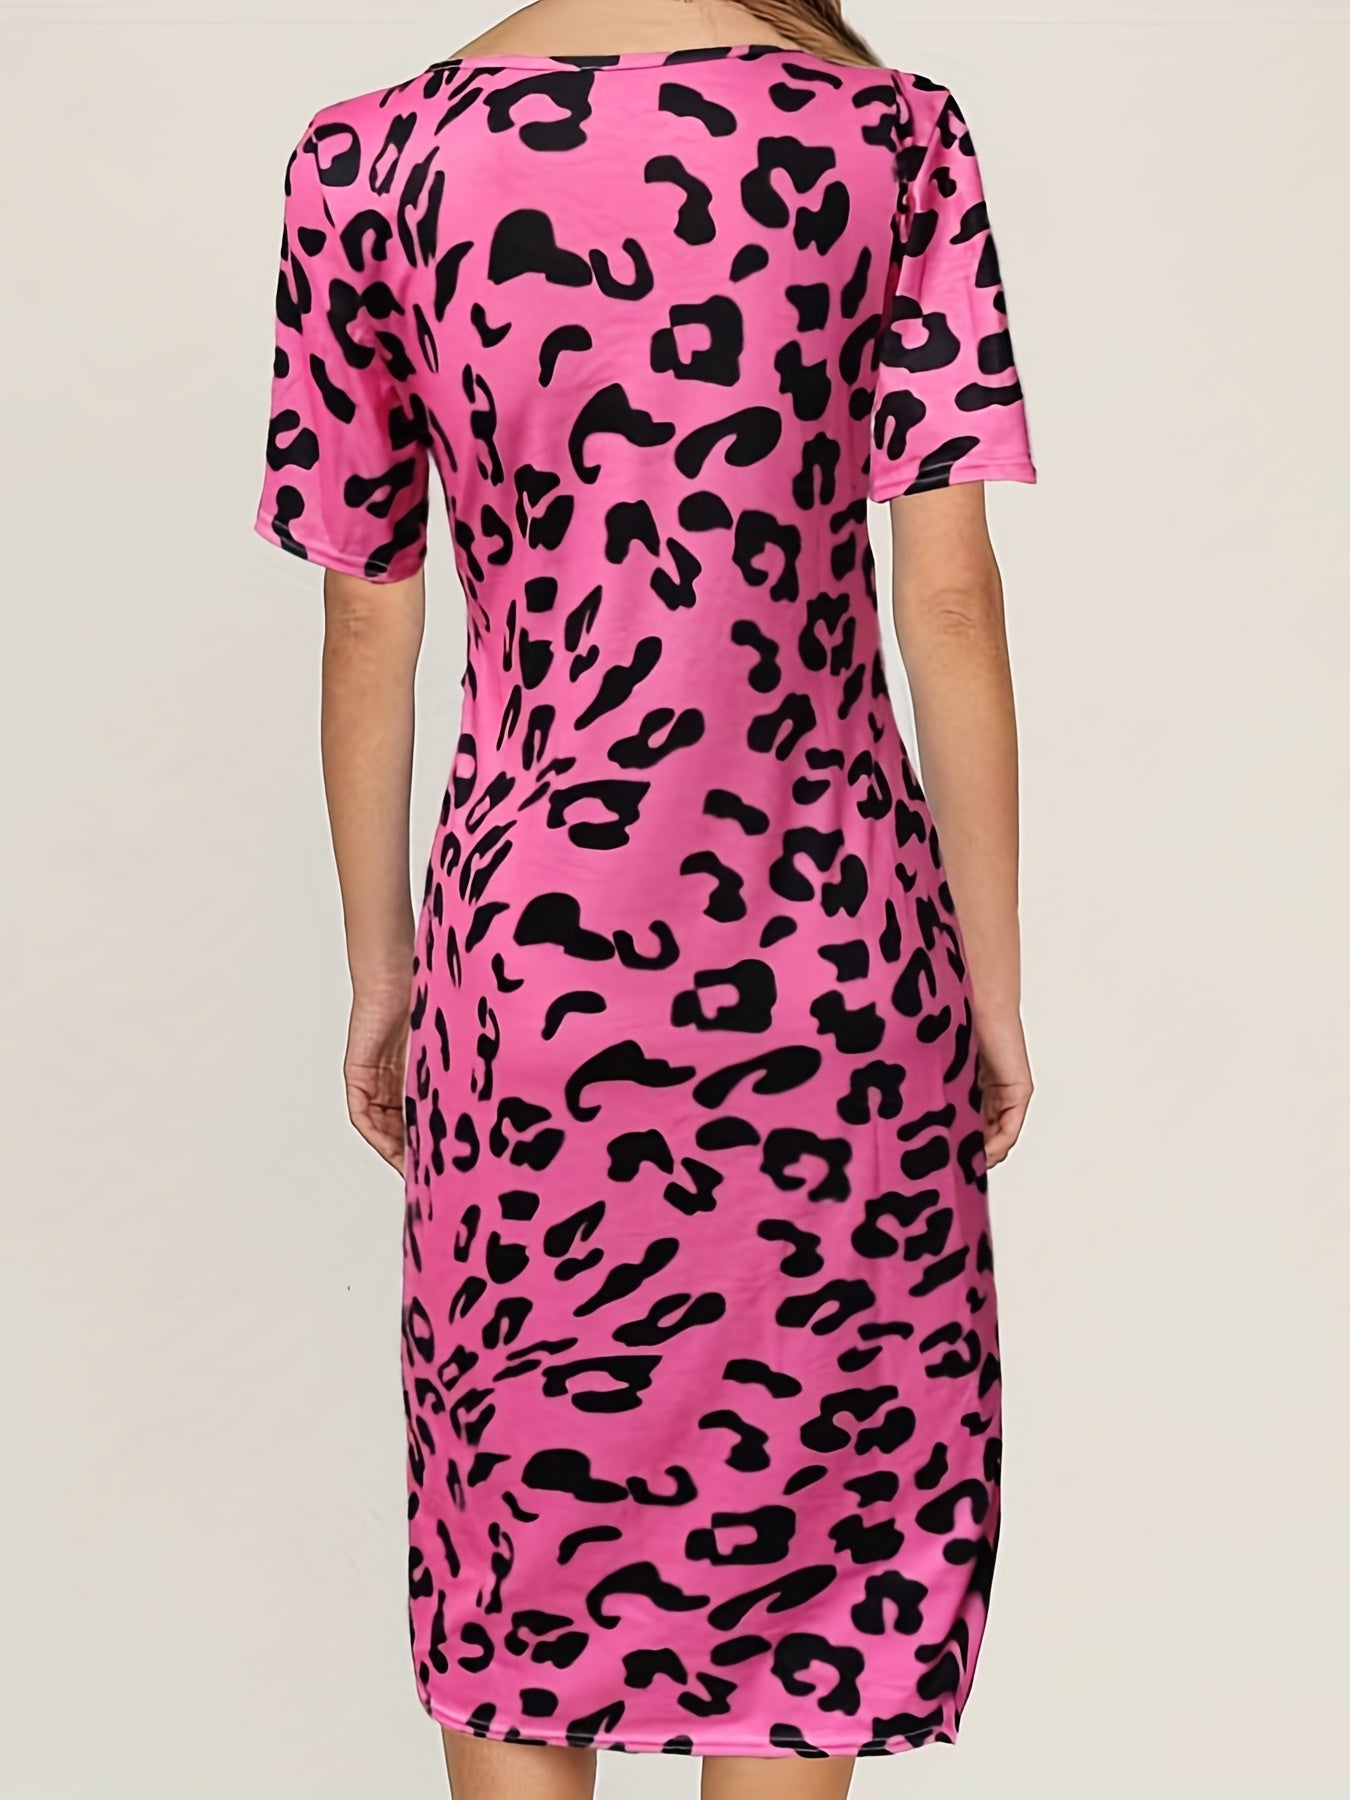 Leopard Print Split Dress, Boho Crew Neck Short Sleeve Bodycon Dress, Women's Clothing